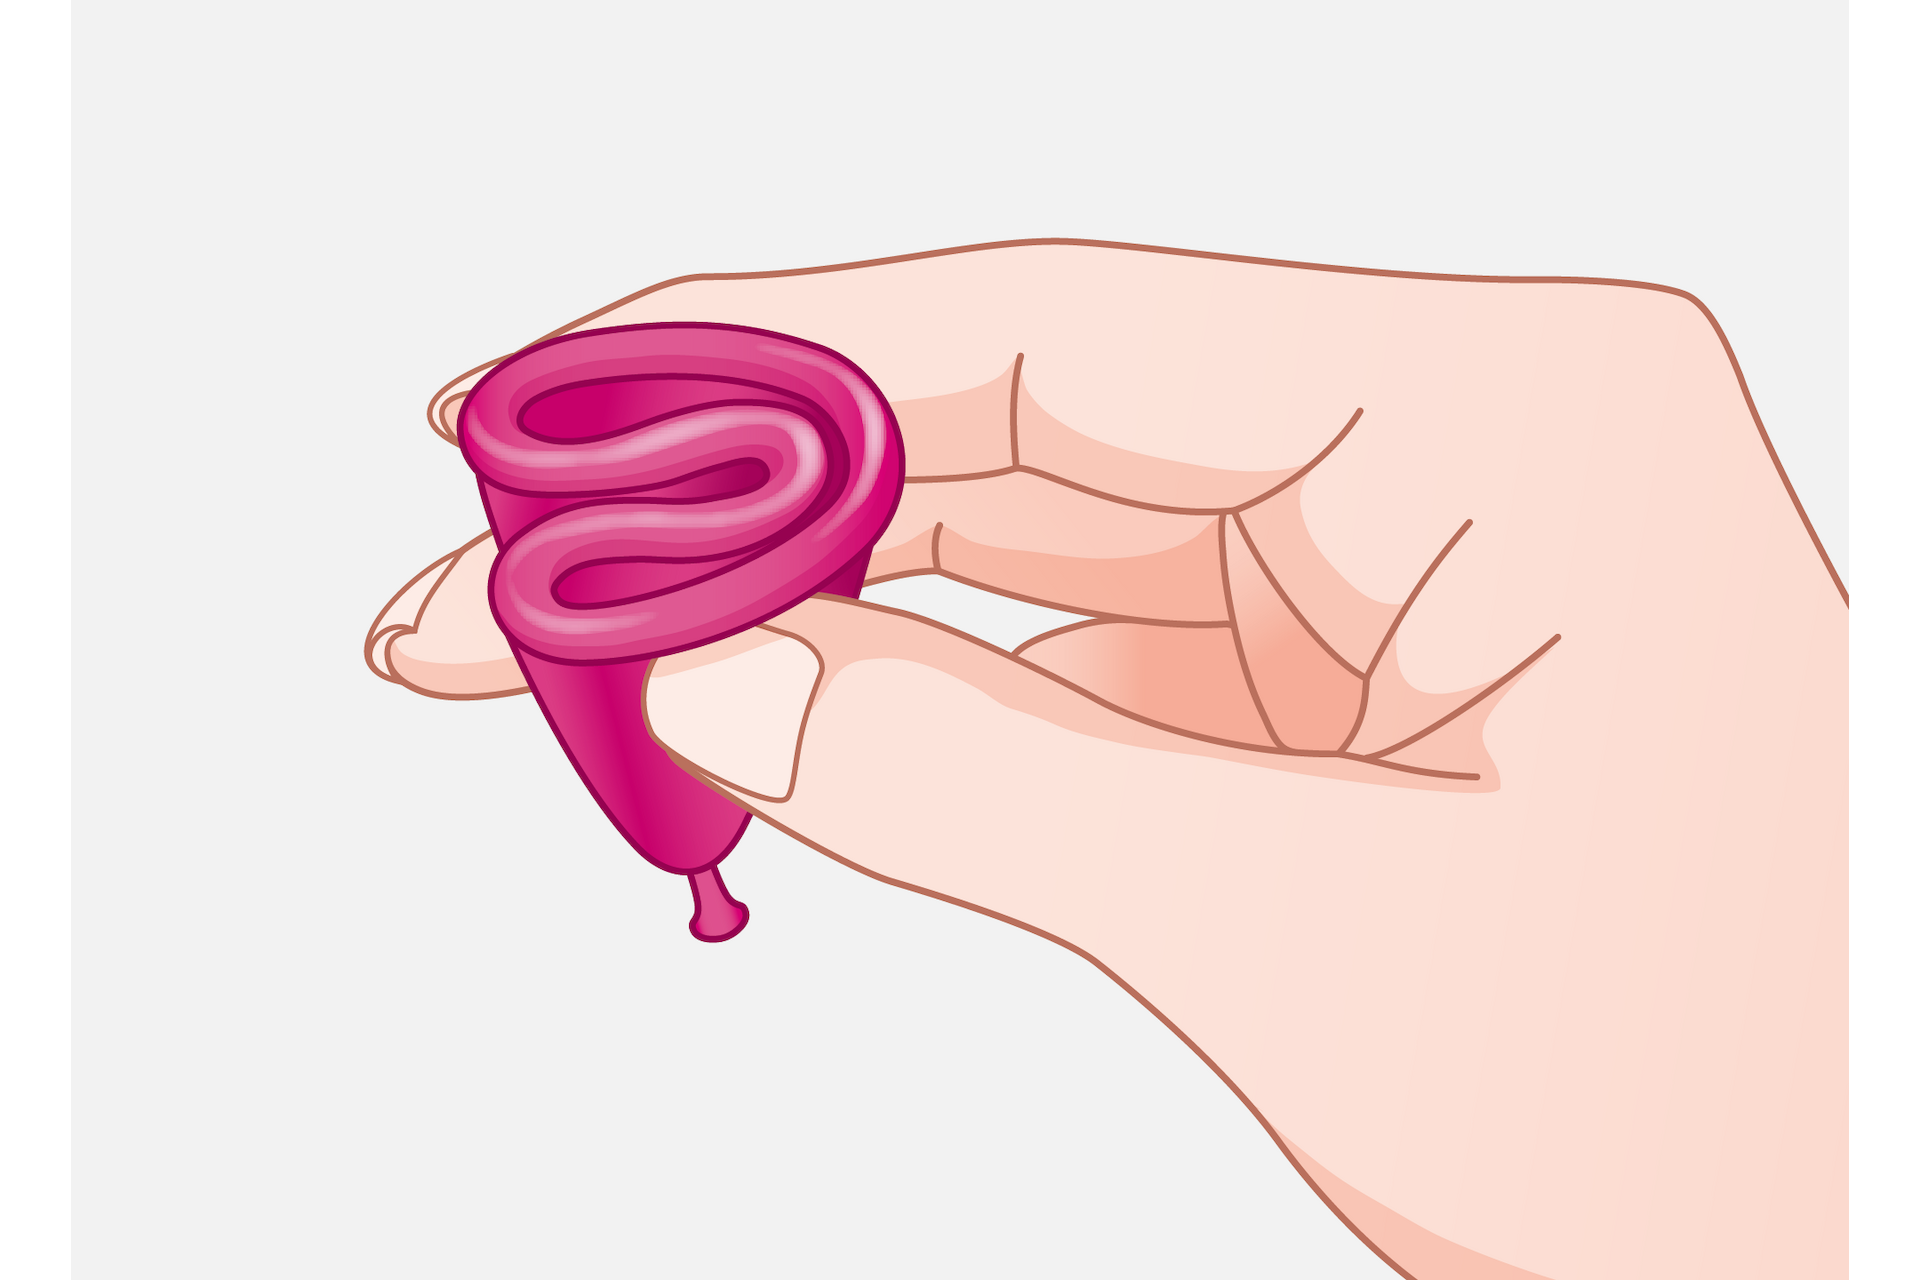 Tulipa Menstruationstasse Größe 1